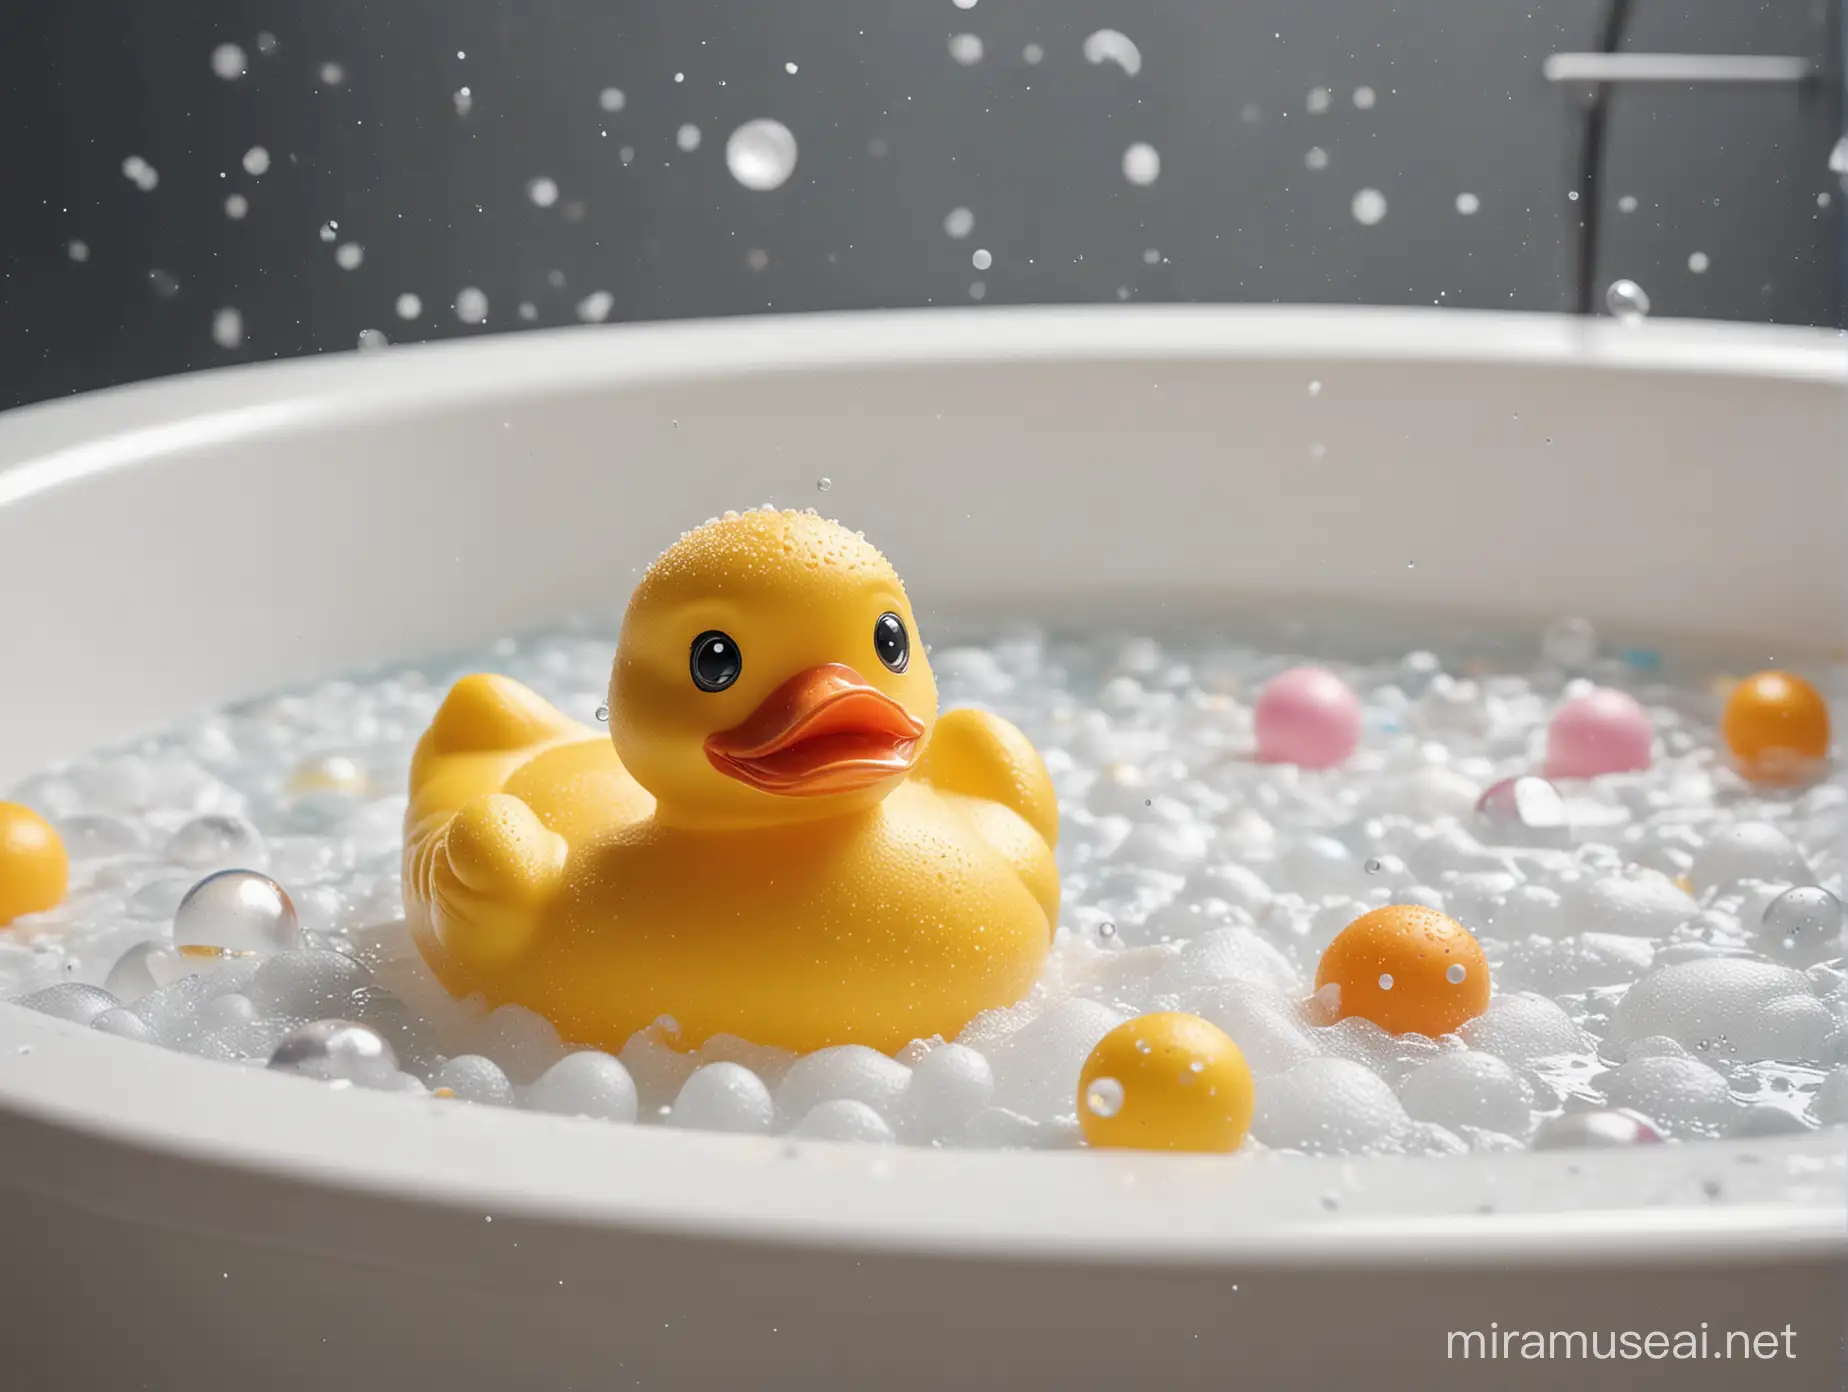 Rubber Duck Enjoying a Soapy Bath in Wide Shot